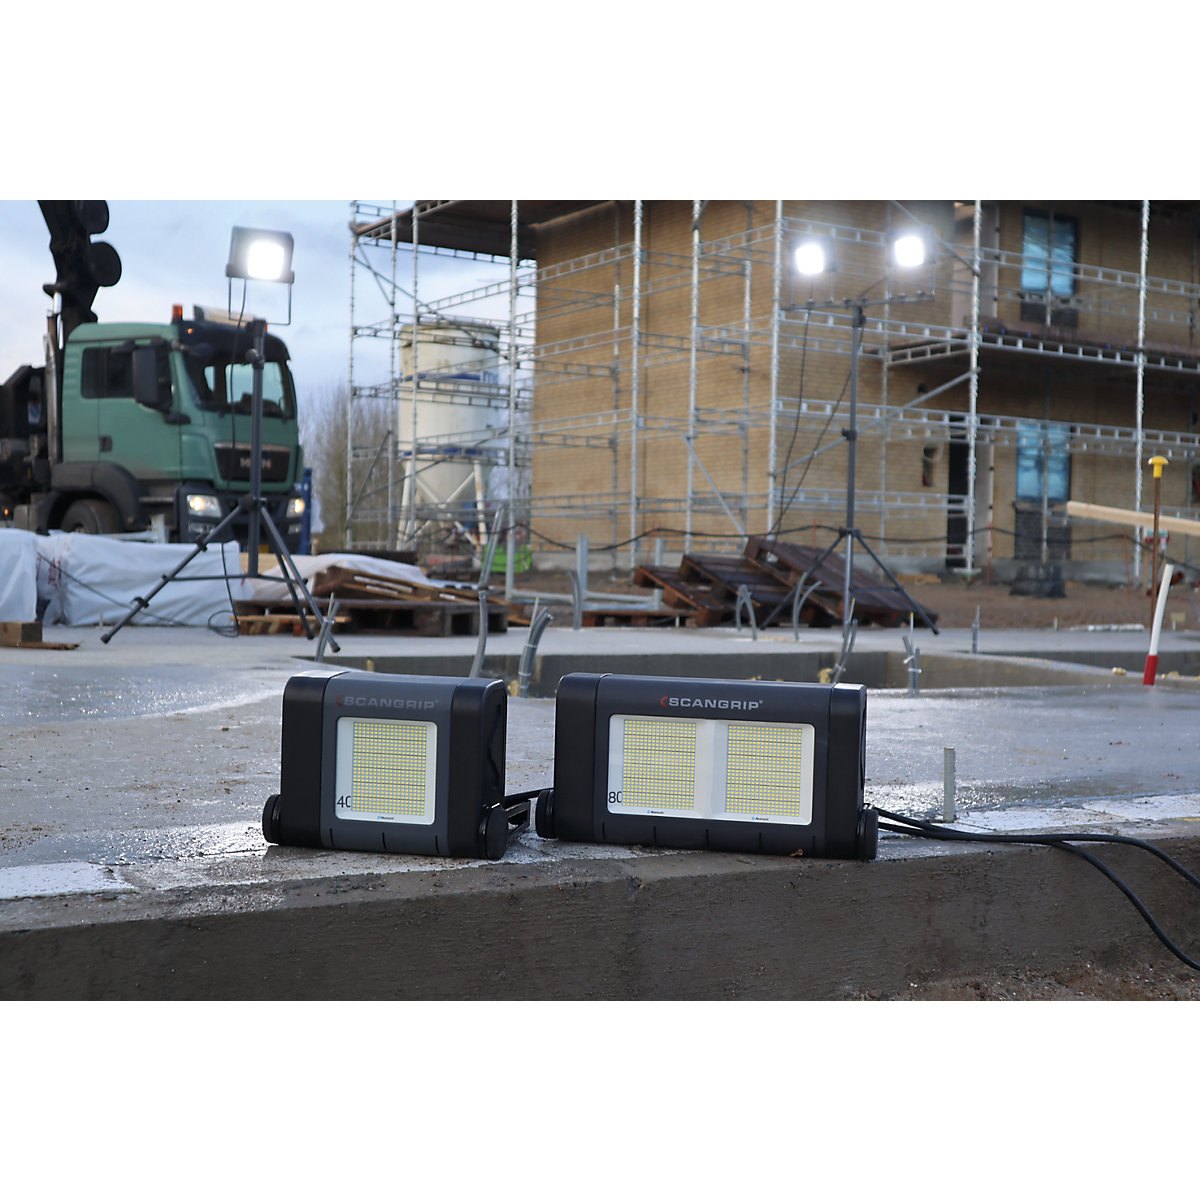 LED građevinski reflektor SITE LIGHT 40 – SCANGRIP (Prikaz proizvoda 26)-25